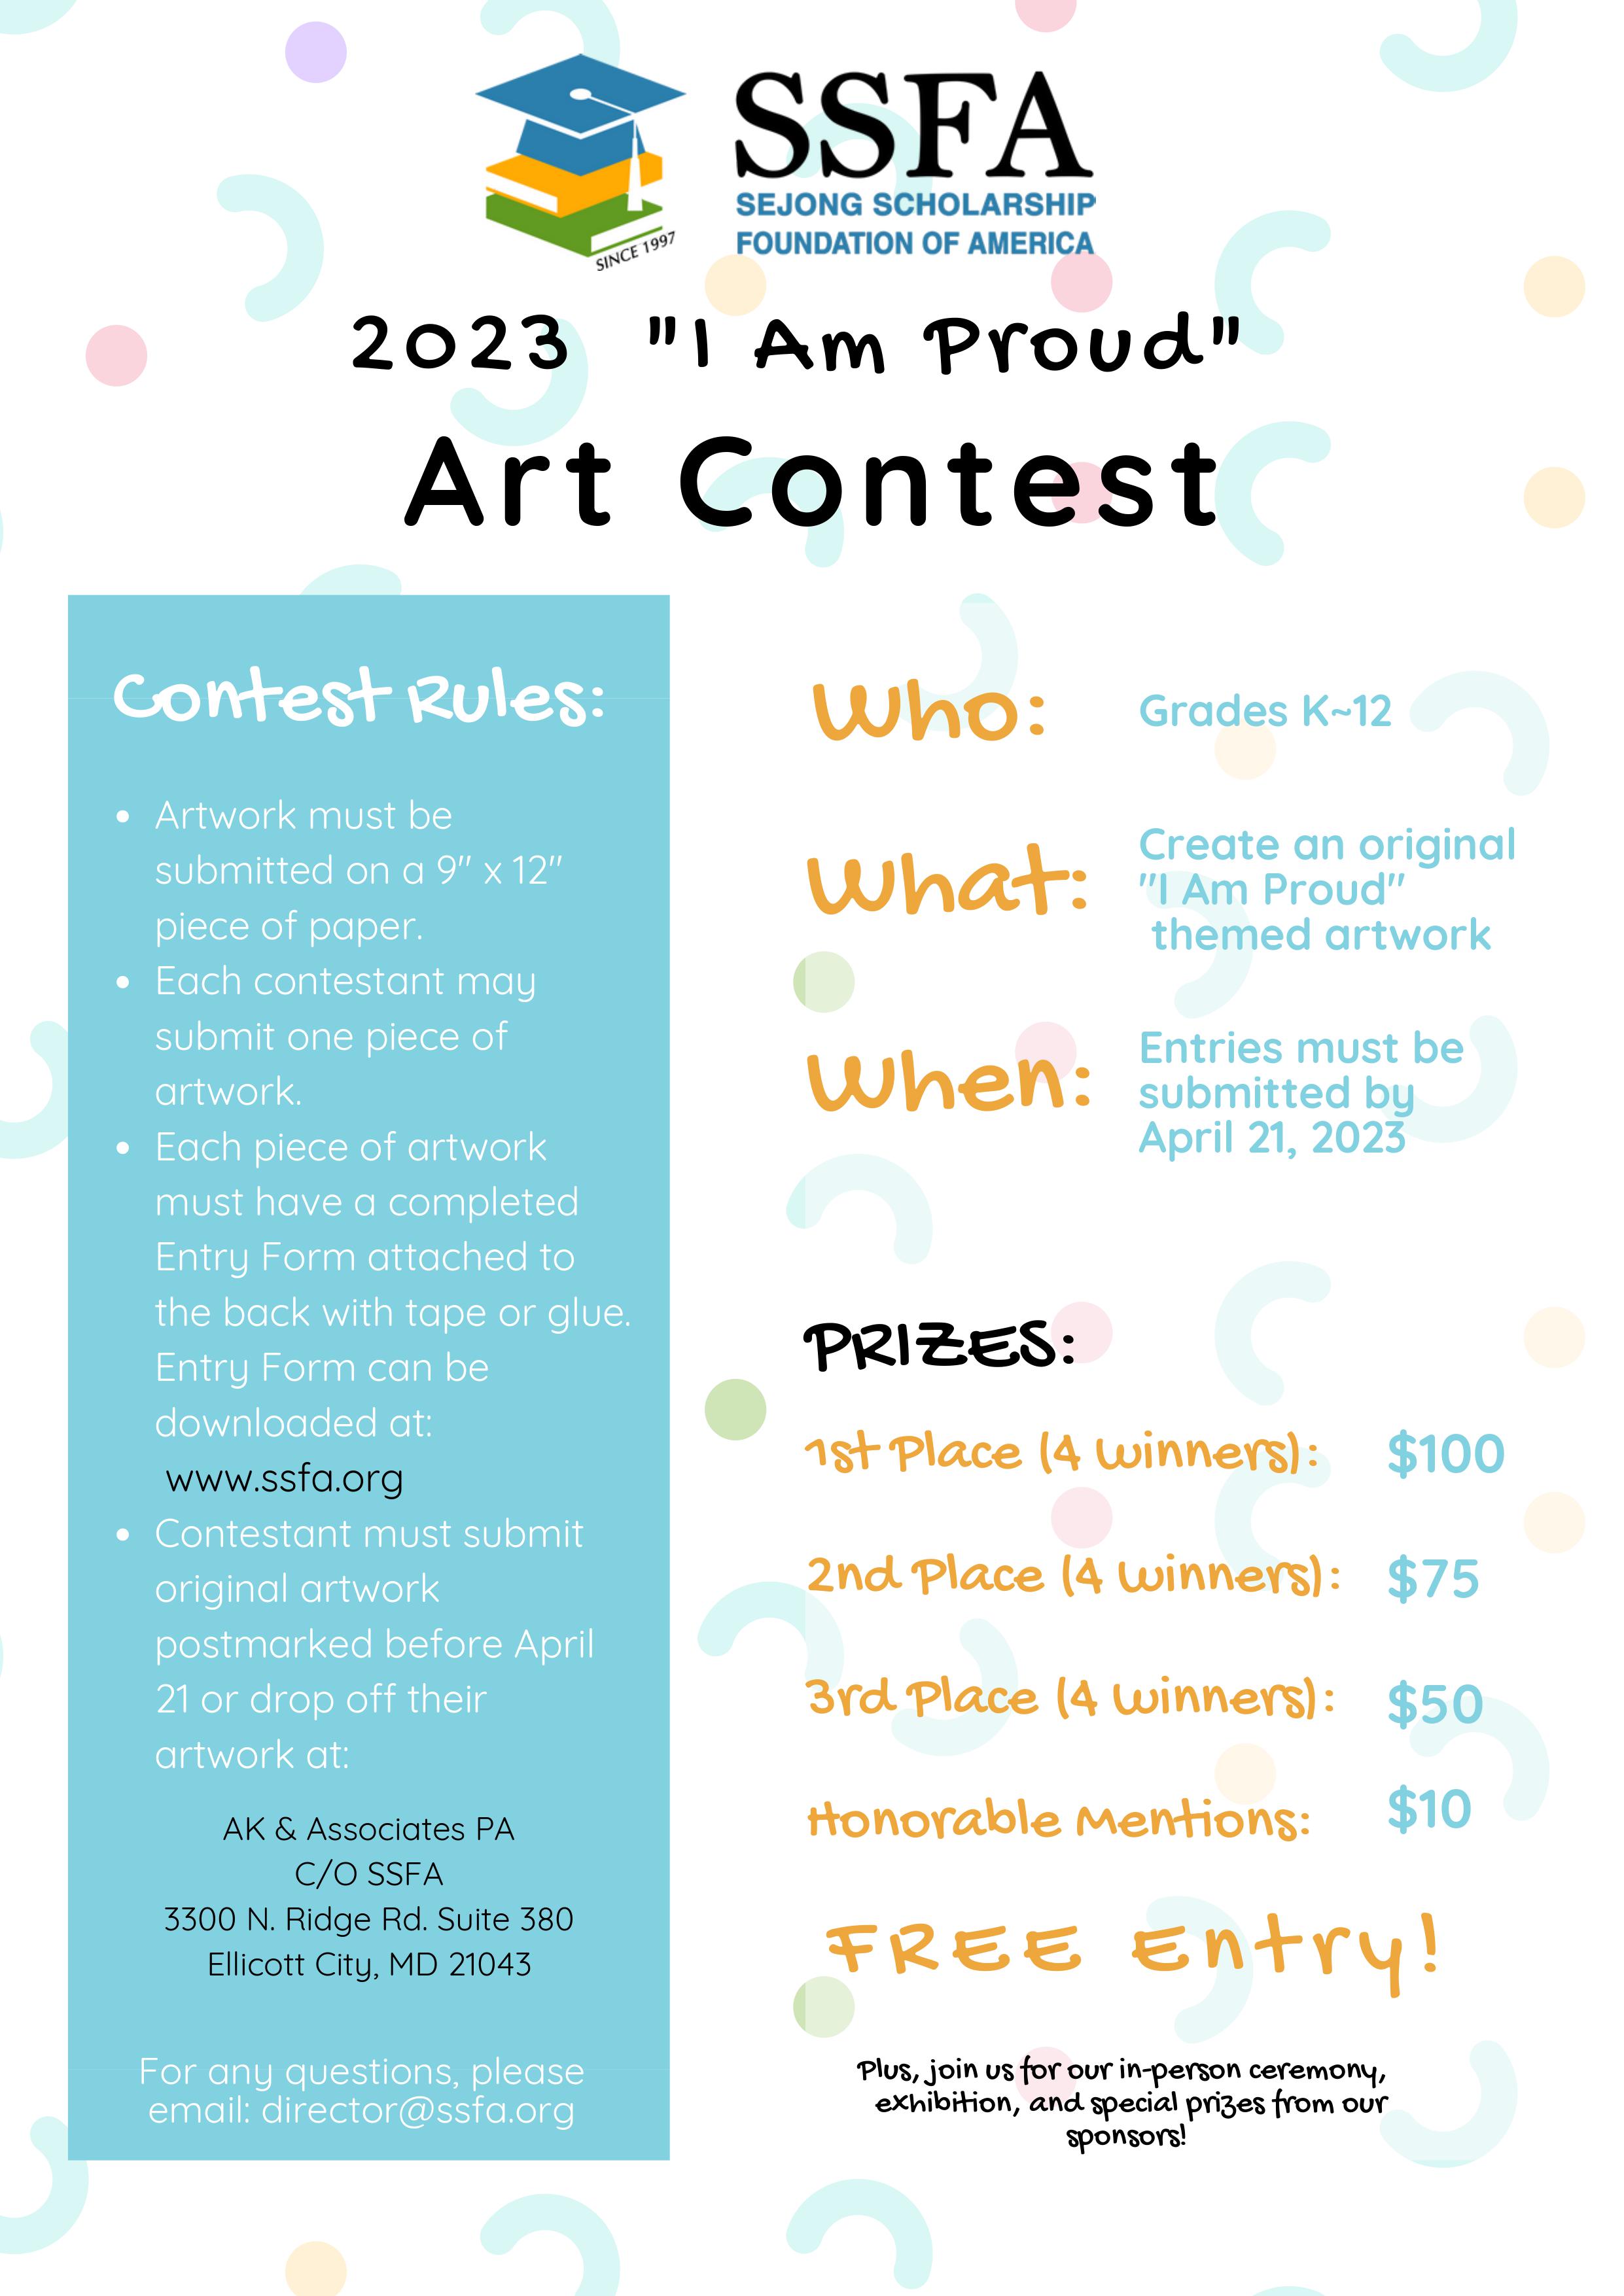 SSFA Art Contest Rules